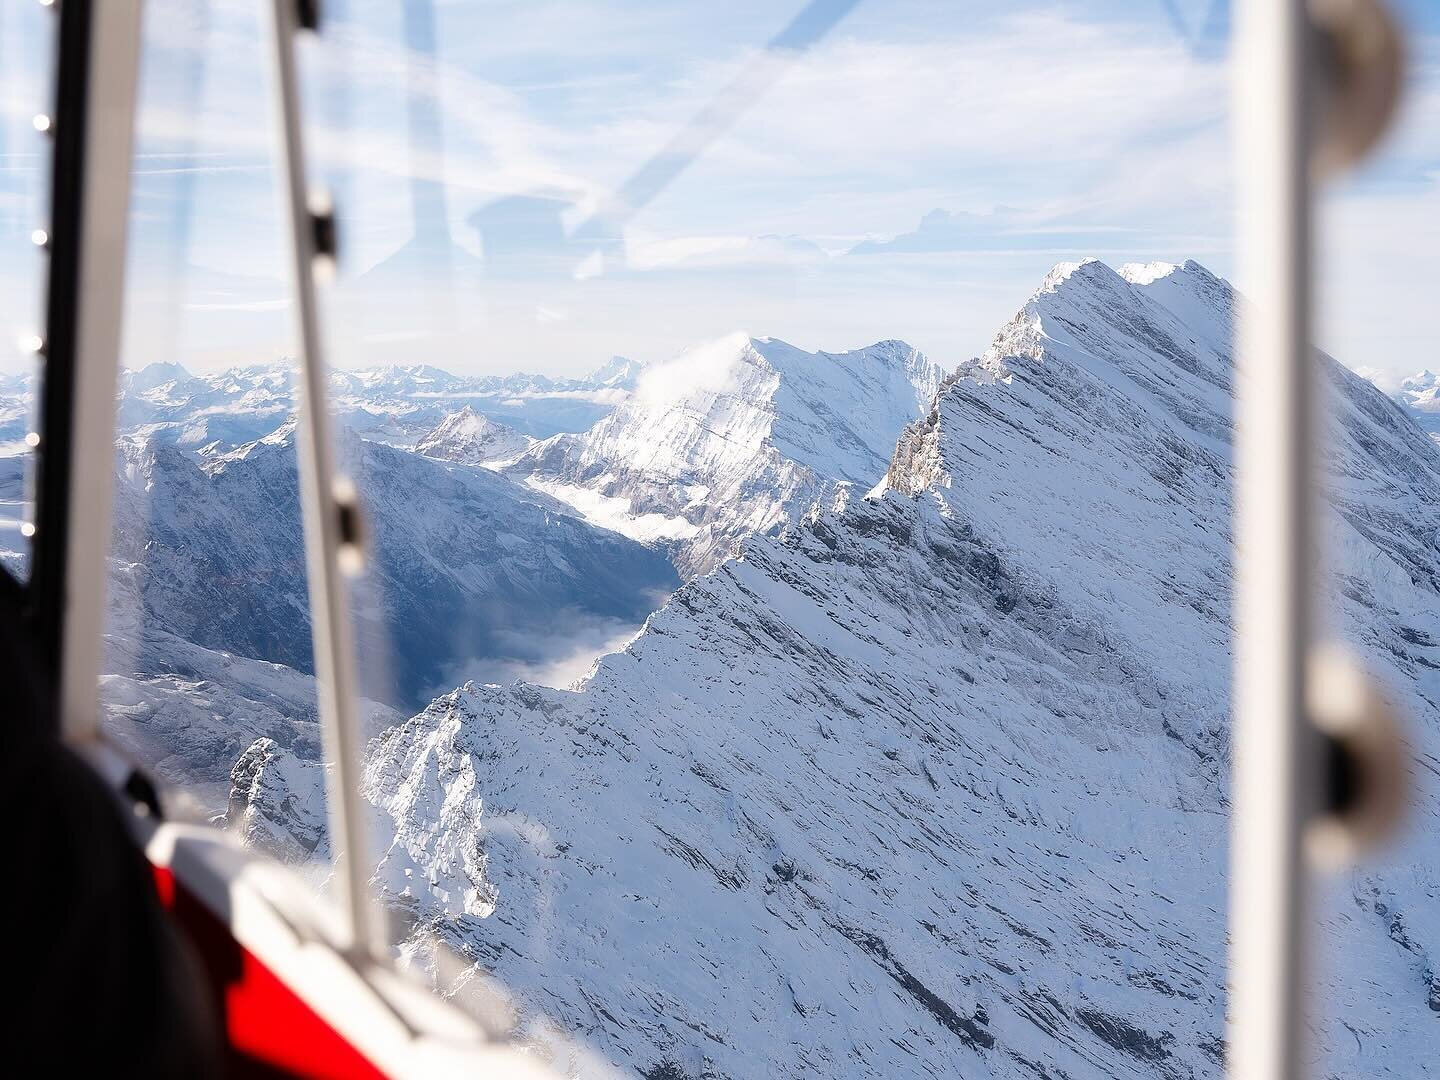 Swiss Alps up close. 🏔️🇨🇭

#switzerland 
#swissalps 
#myswitzerland 
#withmediumrare 
#stunnersoninsta 
#AlpsVibes
#SwissSpectacle
#HighAltitude
#MountainMastery
#AlpsMagic